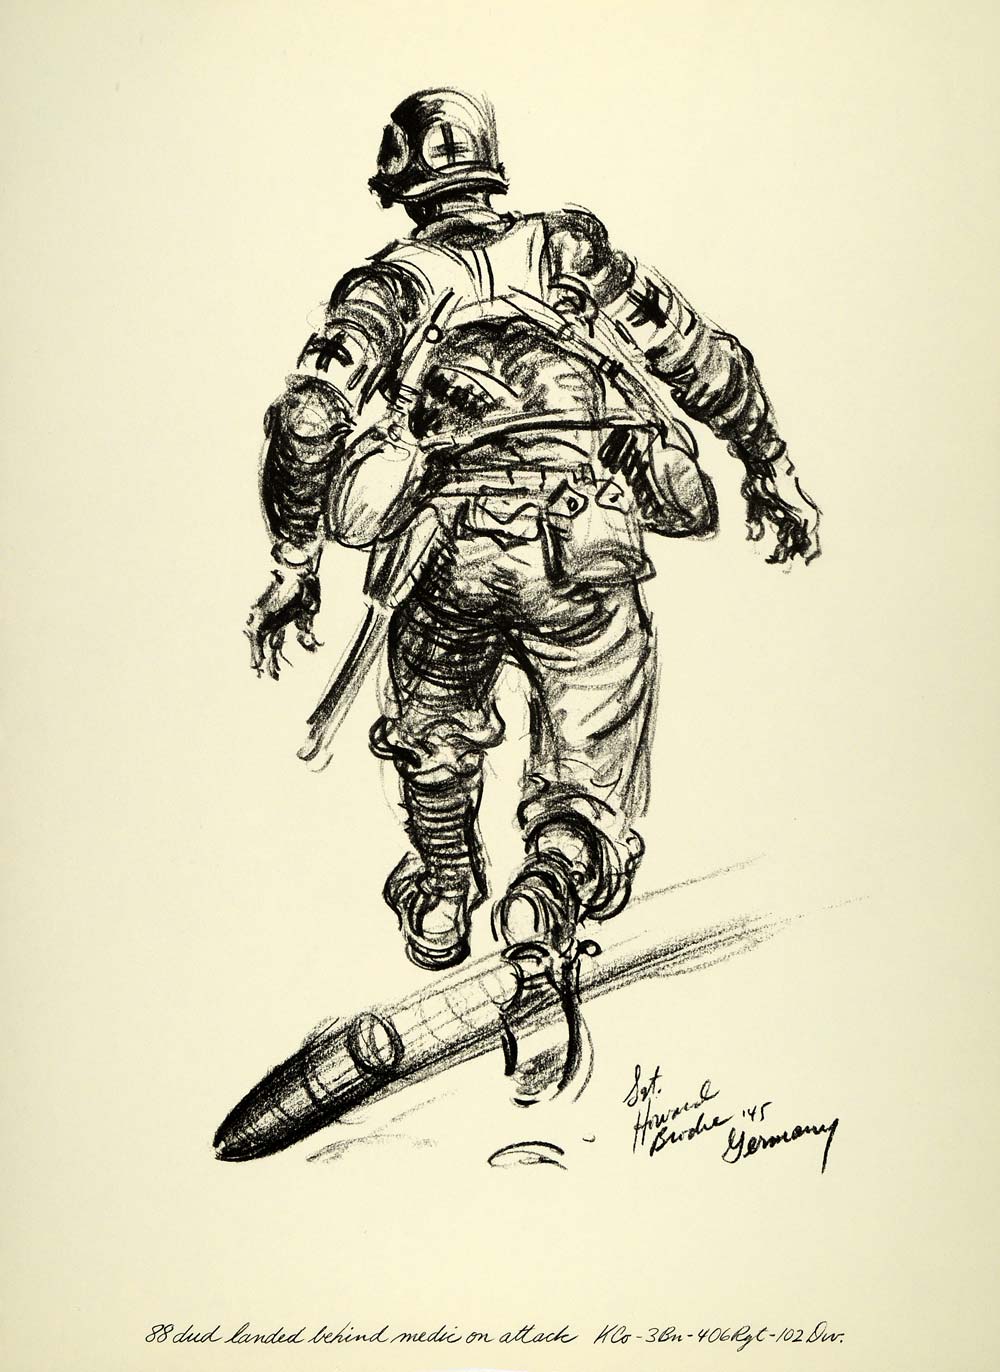 1963 Print Howard Brodie WWII Art Medic Oliver Poythress Soldier Dud 88 Mortar